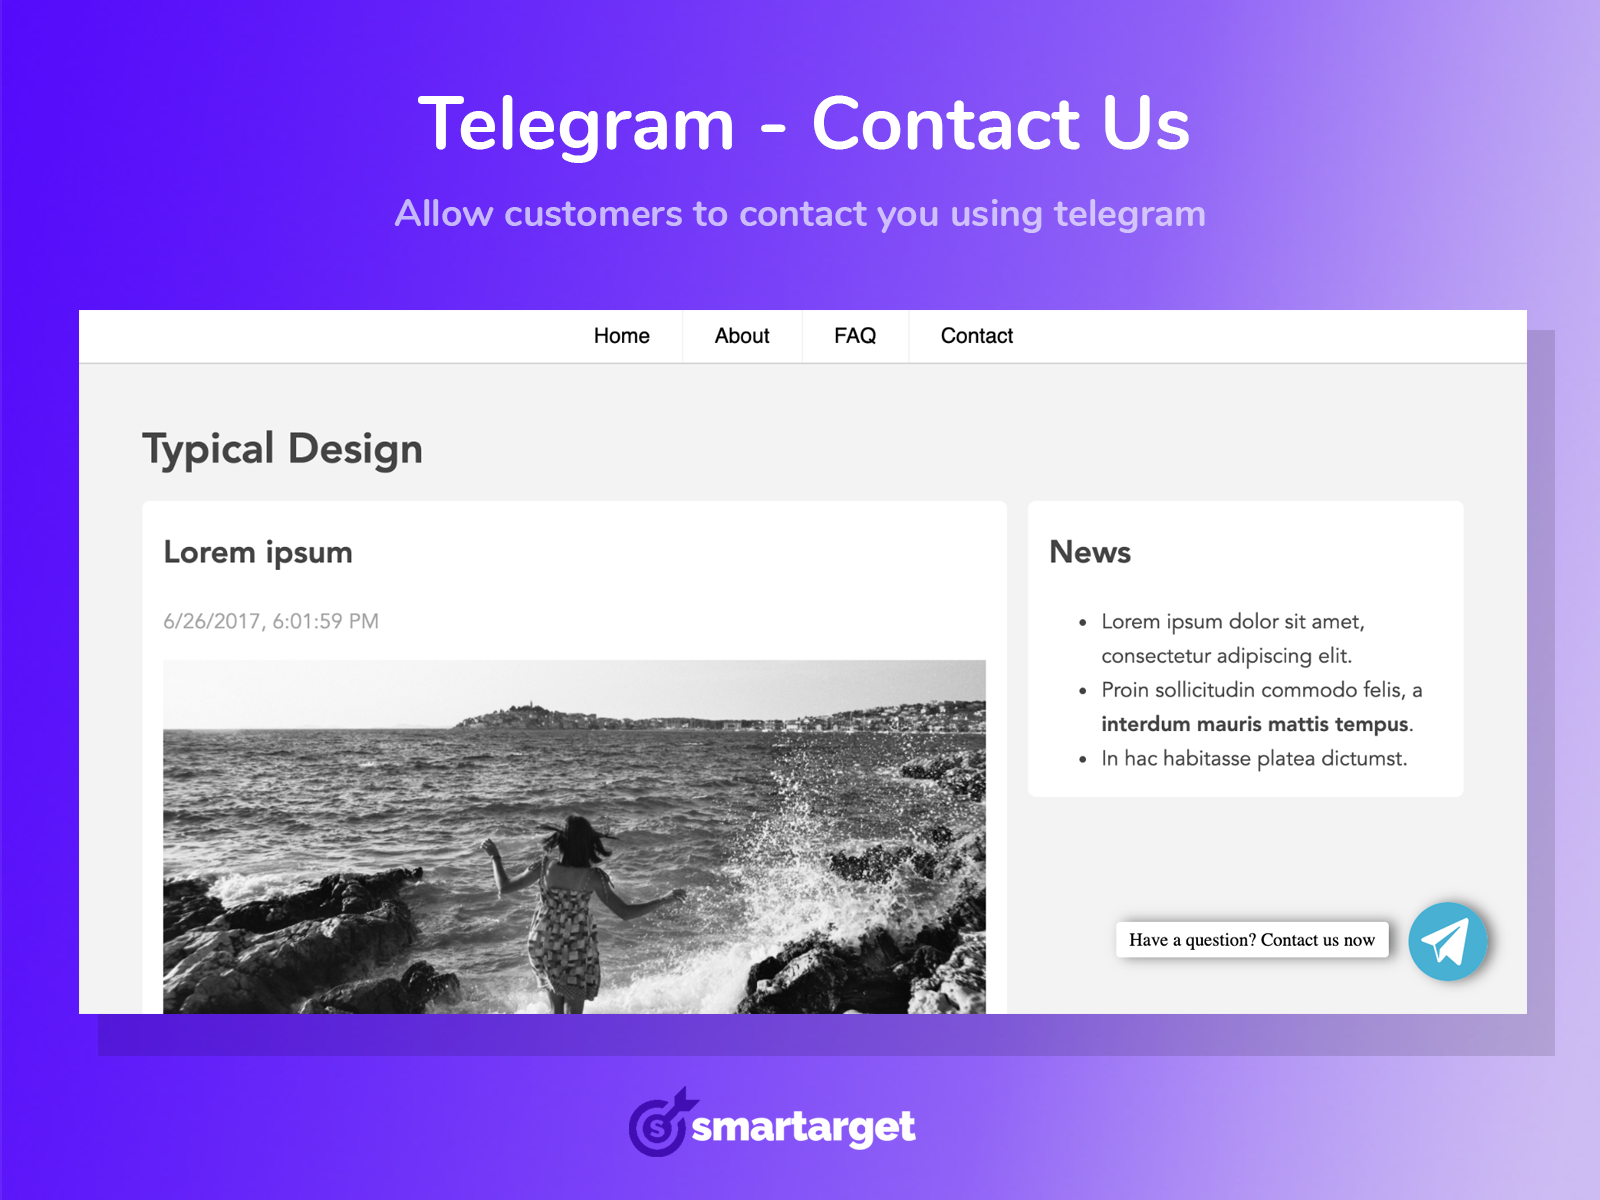 Smartarget Telegram - Contact Us Image